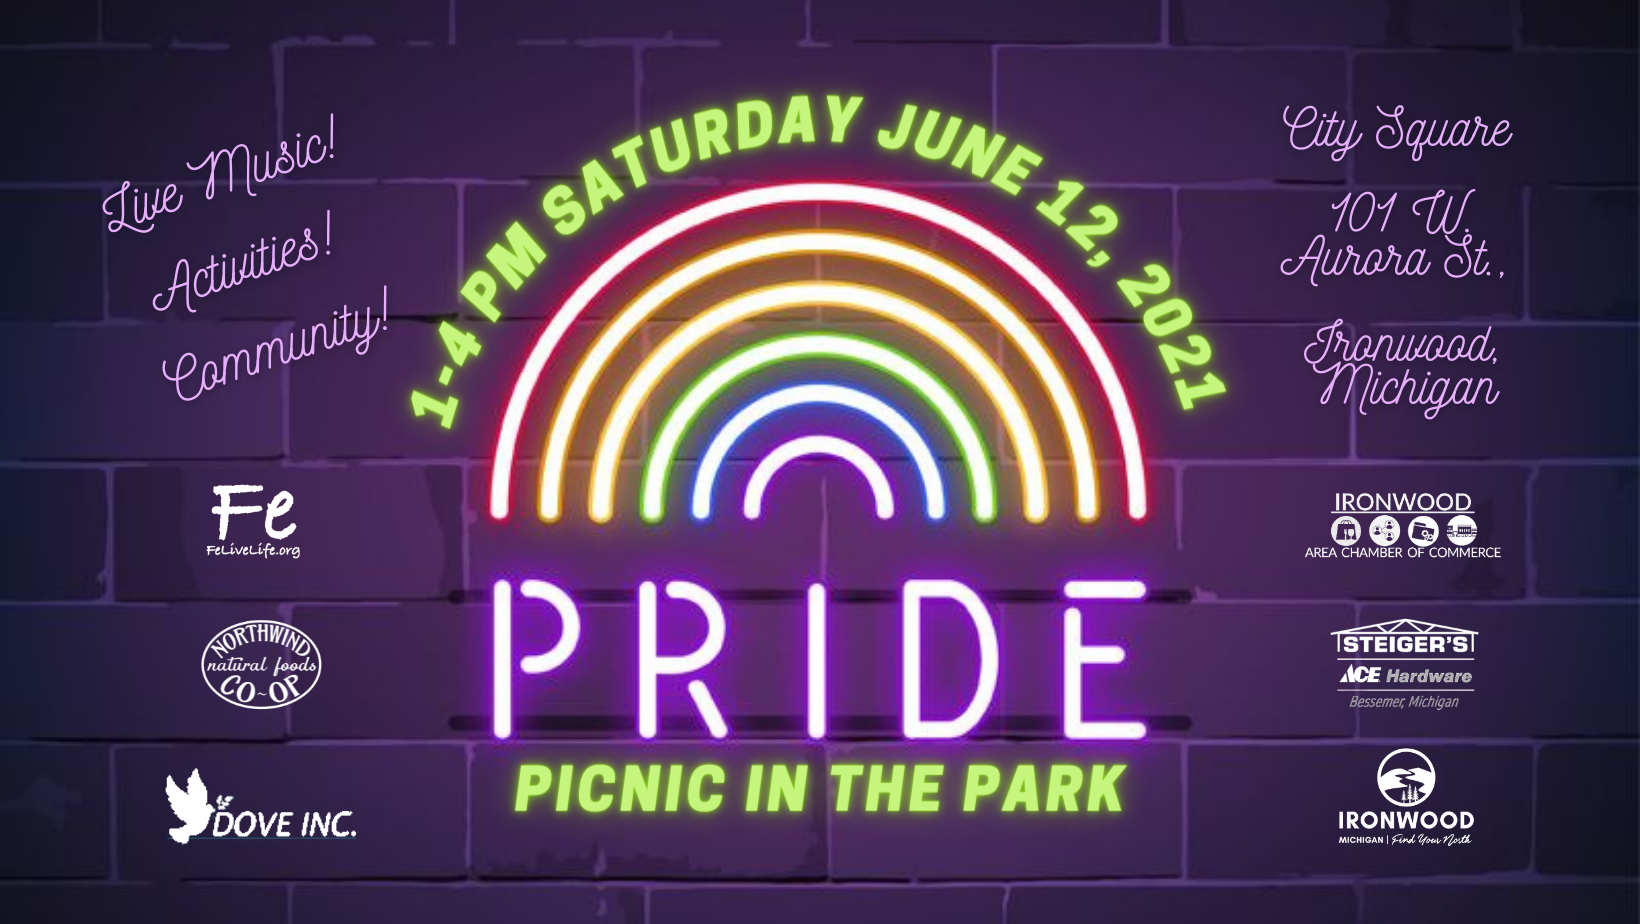 Pride Picnic in the Park FeLiveLife Gogebic Iron Range Event Calendar